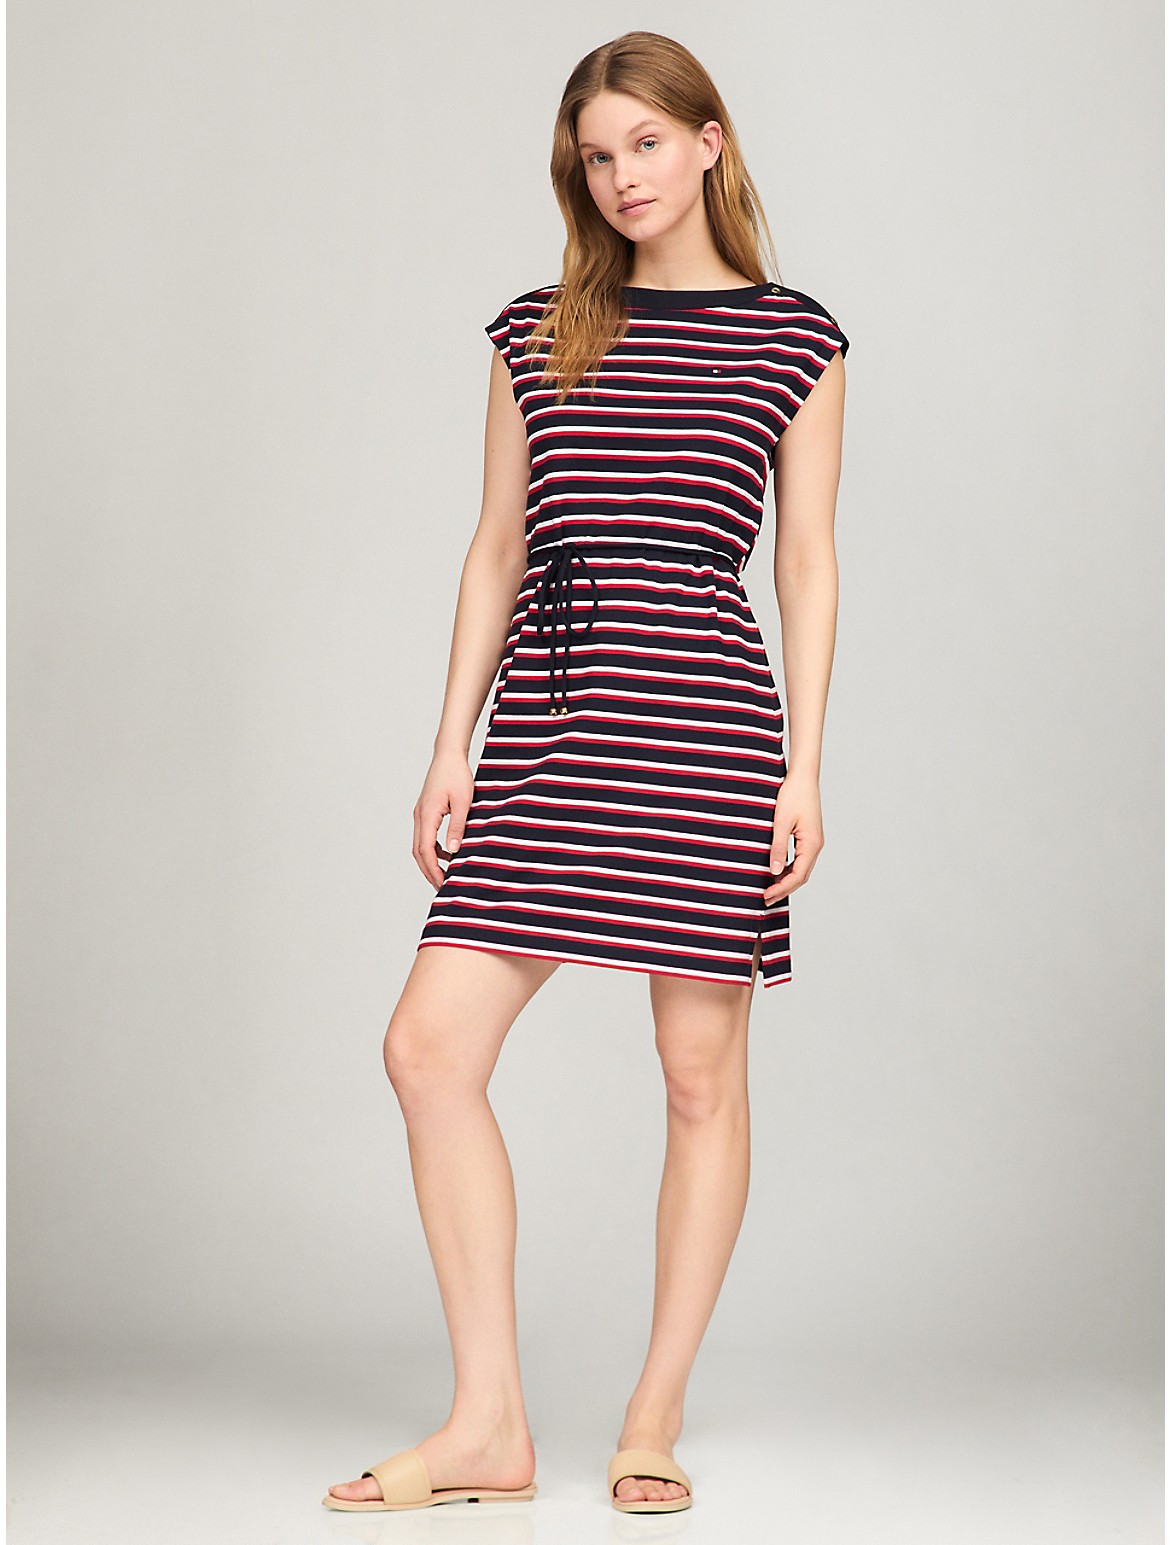 Tommy Hilfiger Women's Everyday Stripe Dress - Blue - S